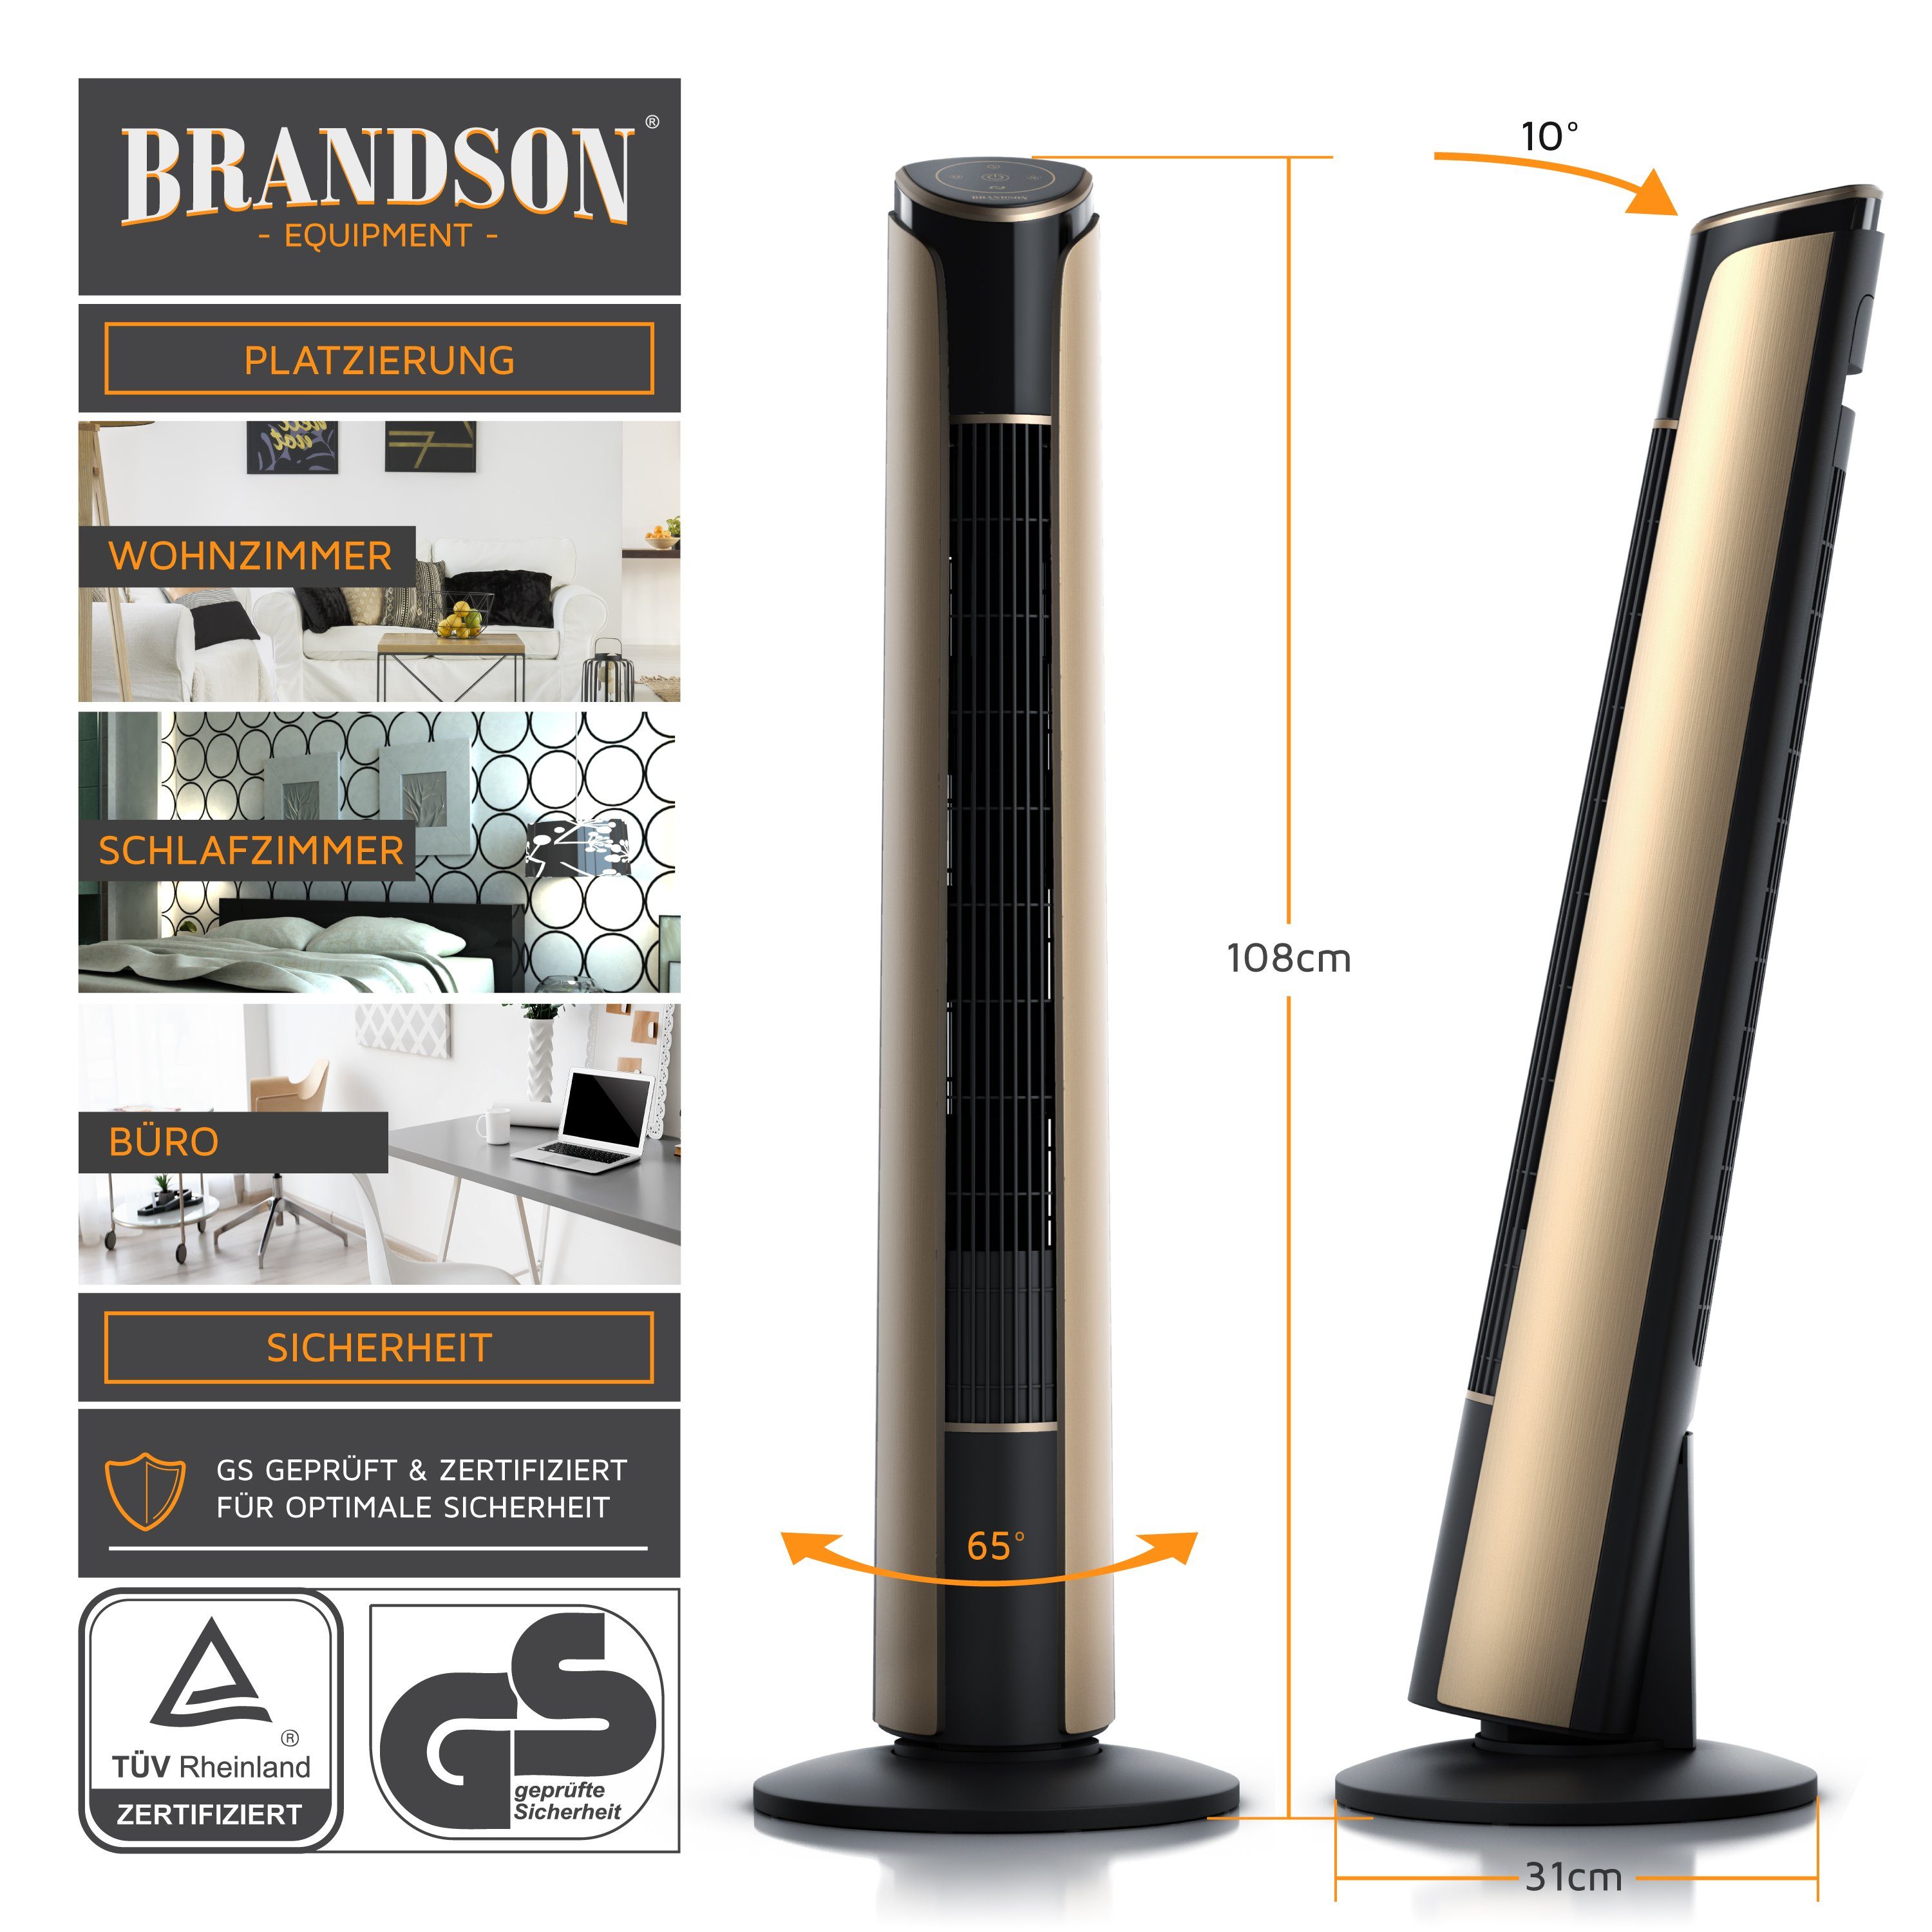 Brandson Turmventilator, neigbar, 4 Modi, Oszillation, Standventilator gold 10° 108cm Fernbedienung